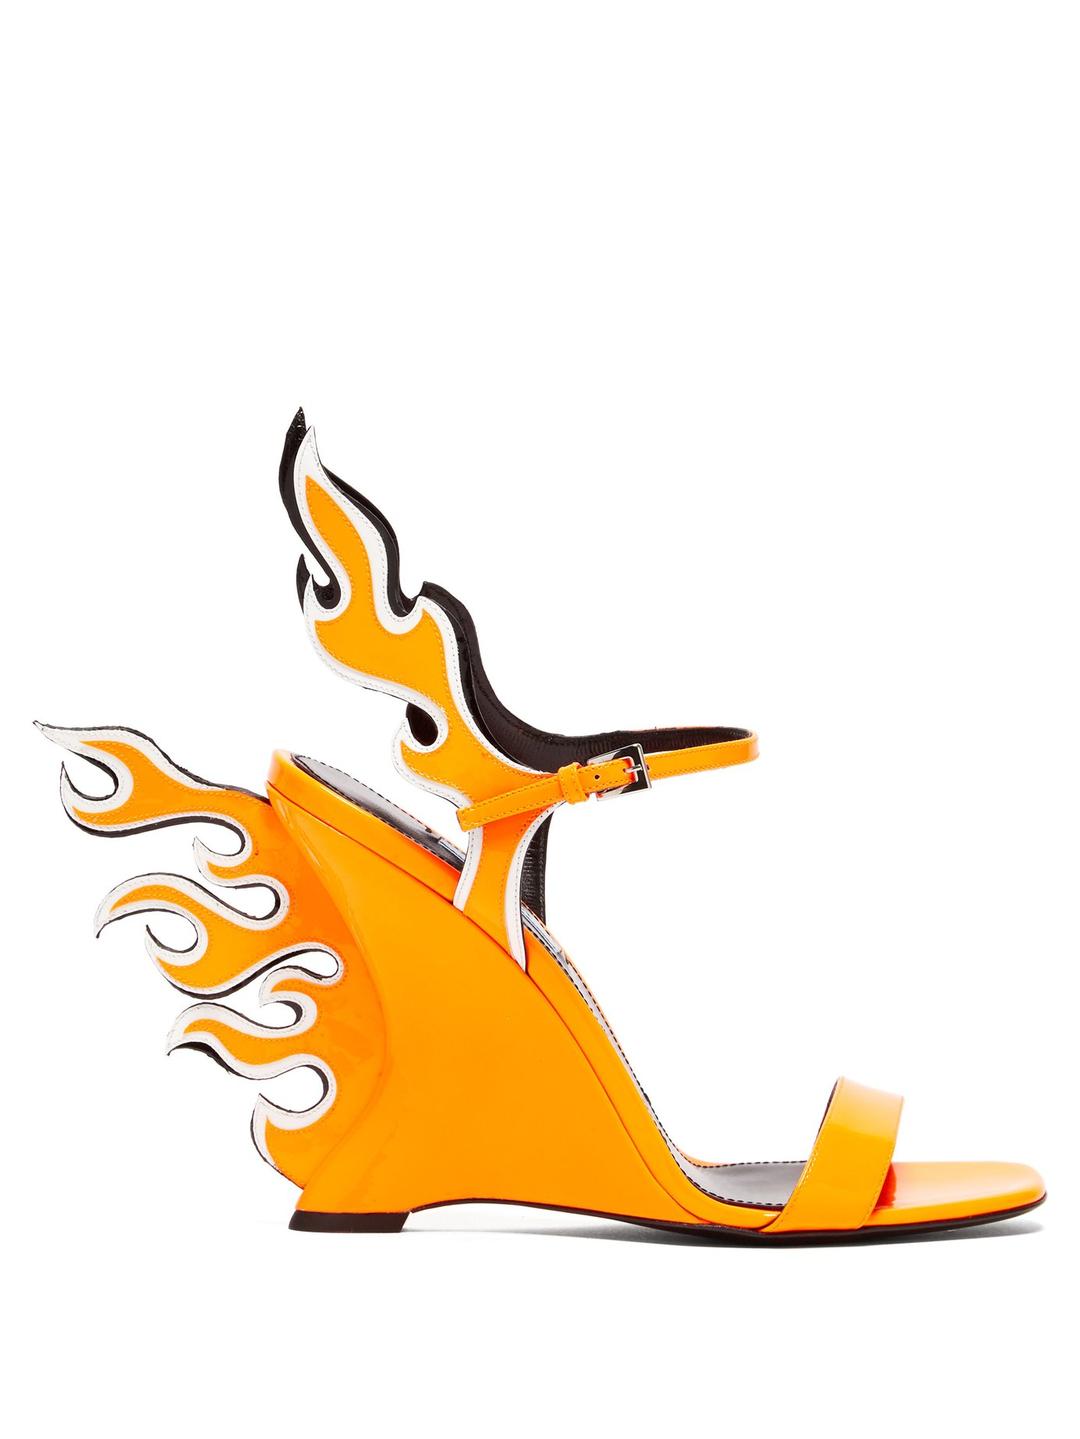 prada flame shoes price